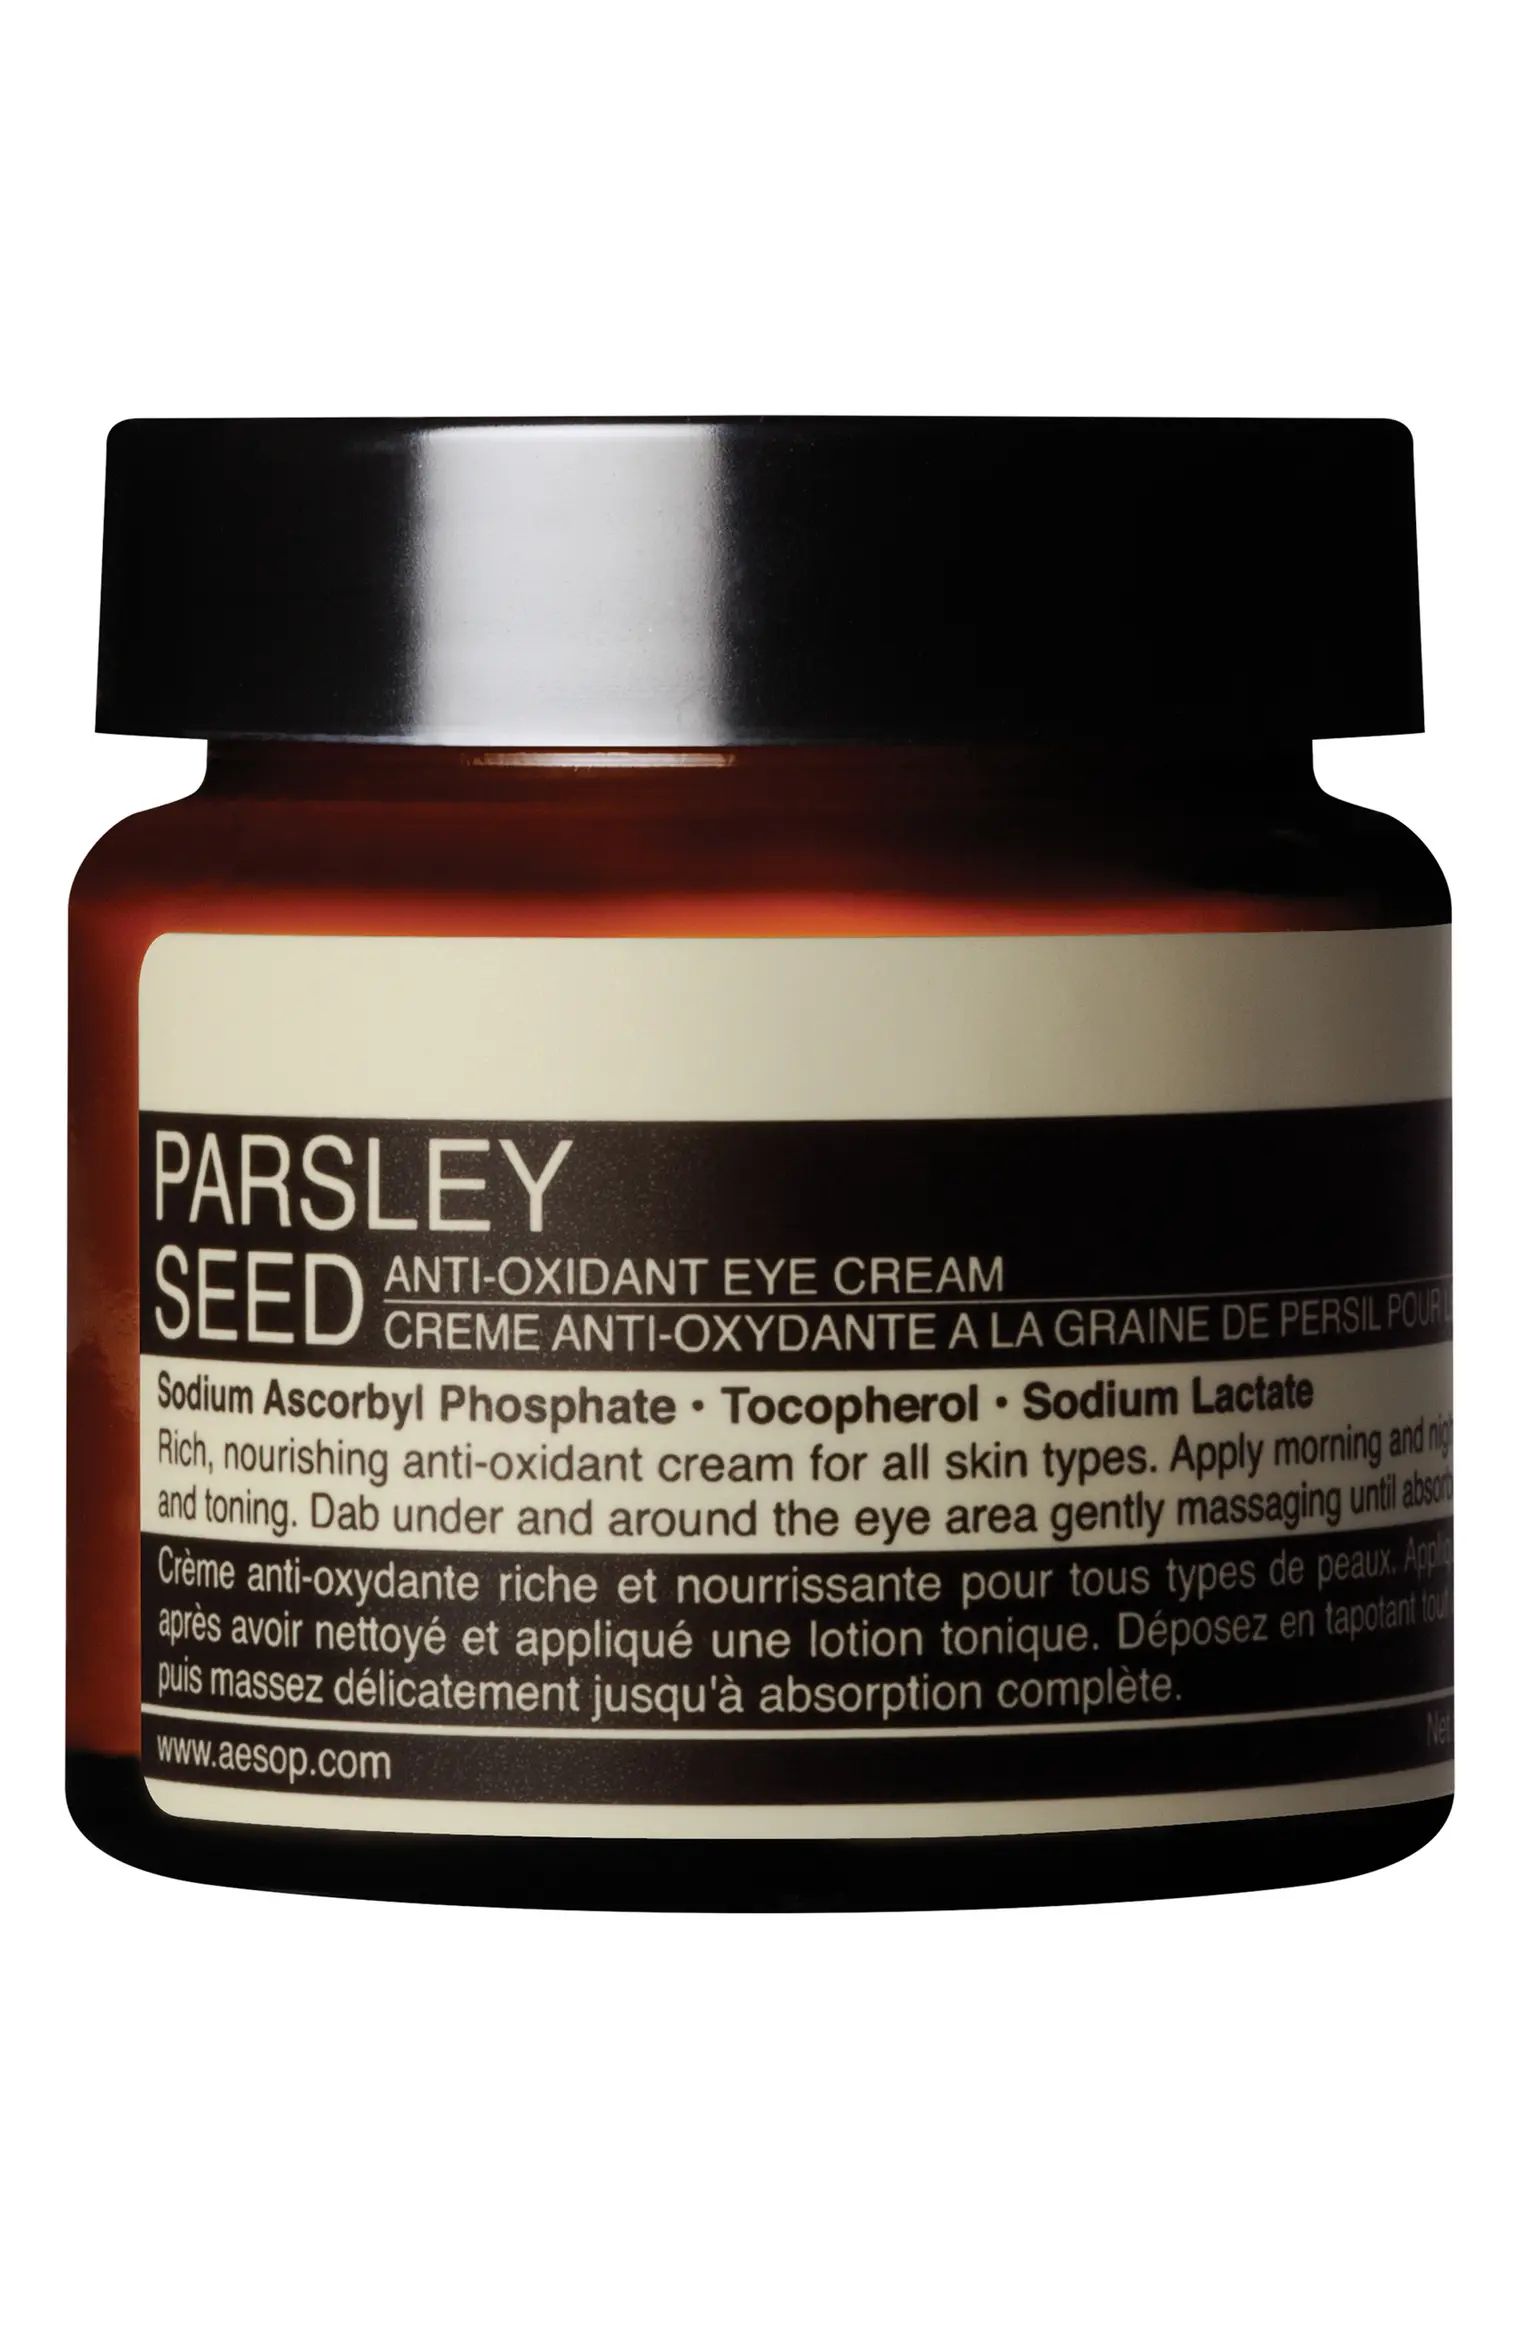 Parsley Seed Anti-Oxidant Eye Cream | Nordstrom